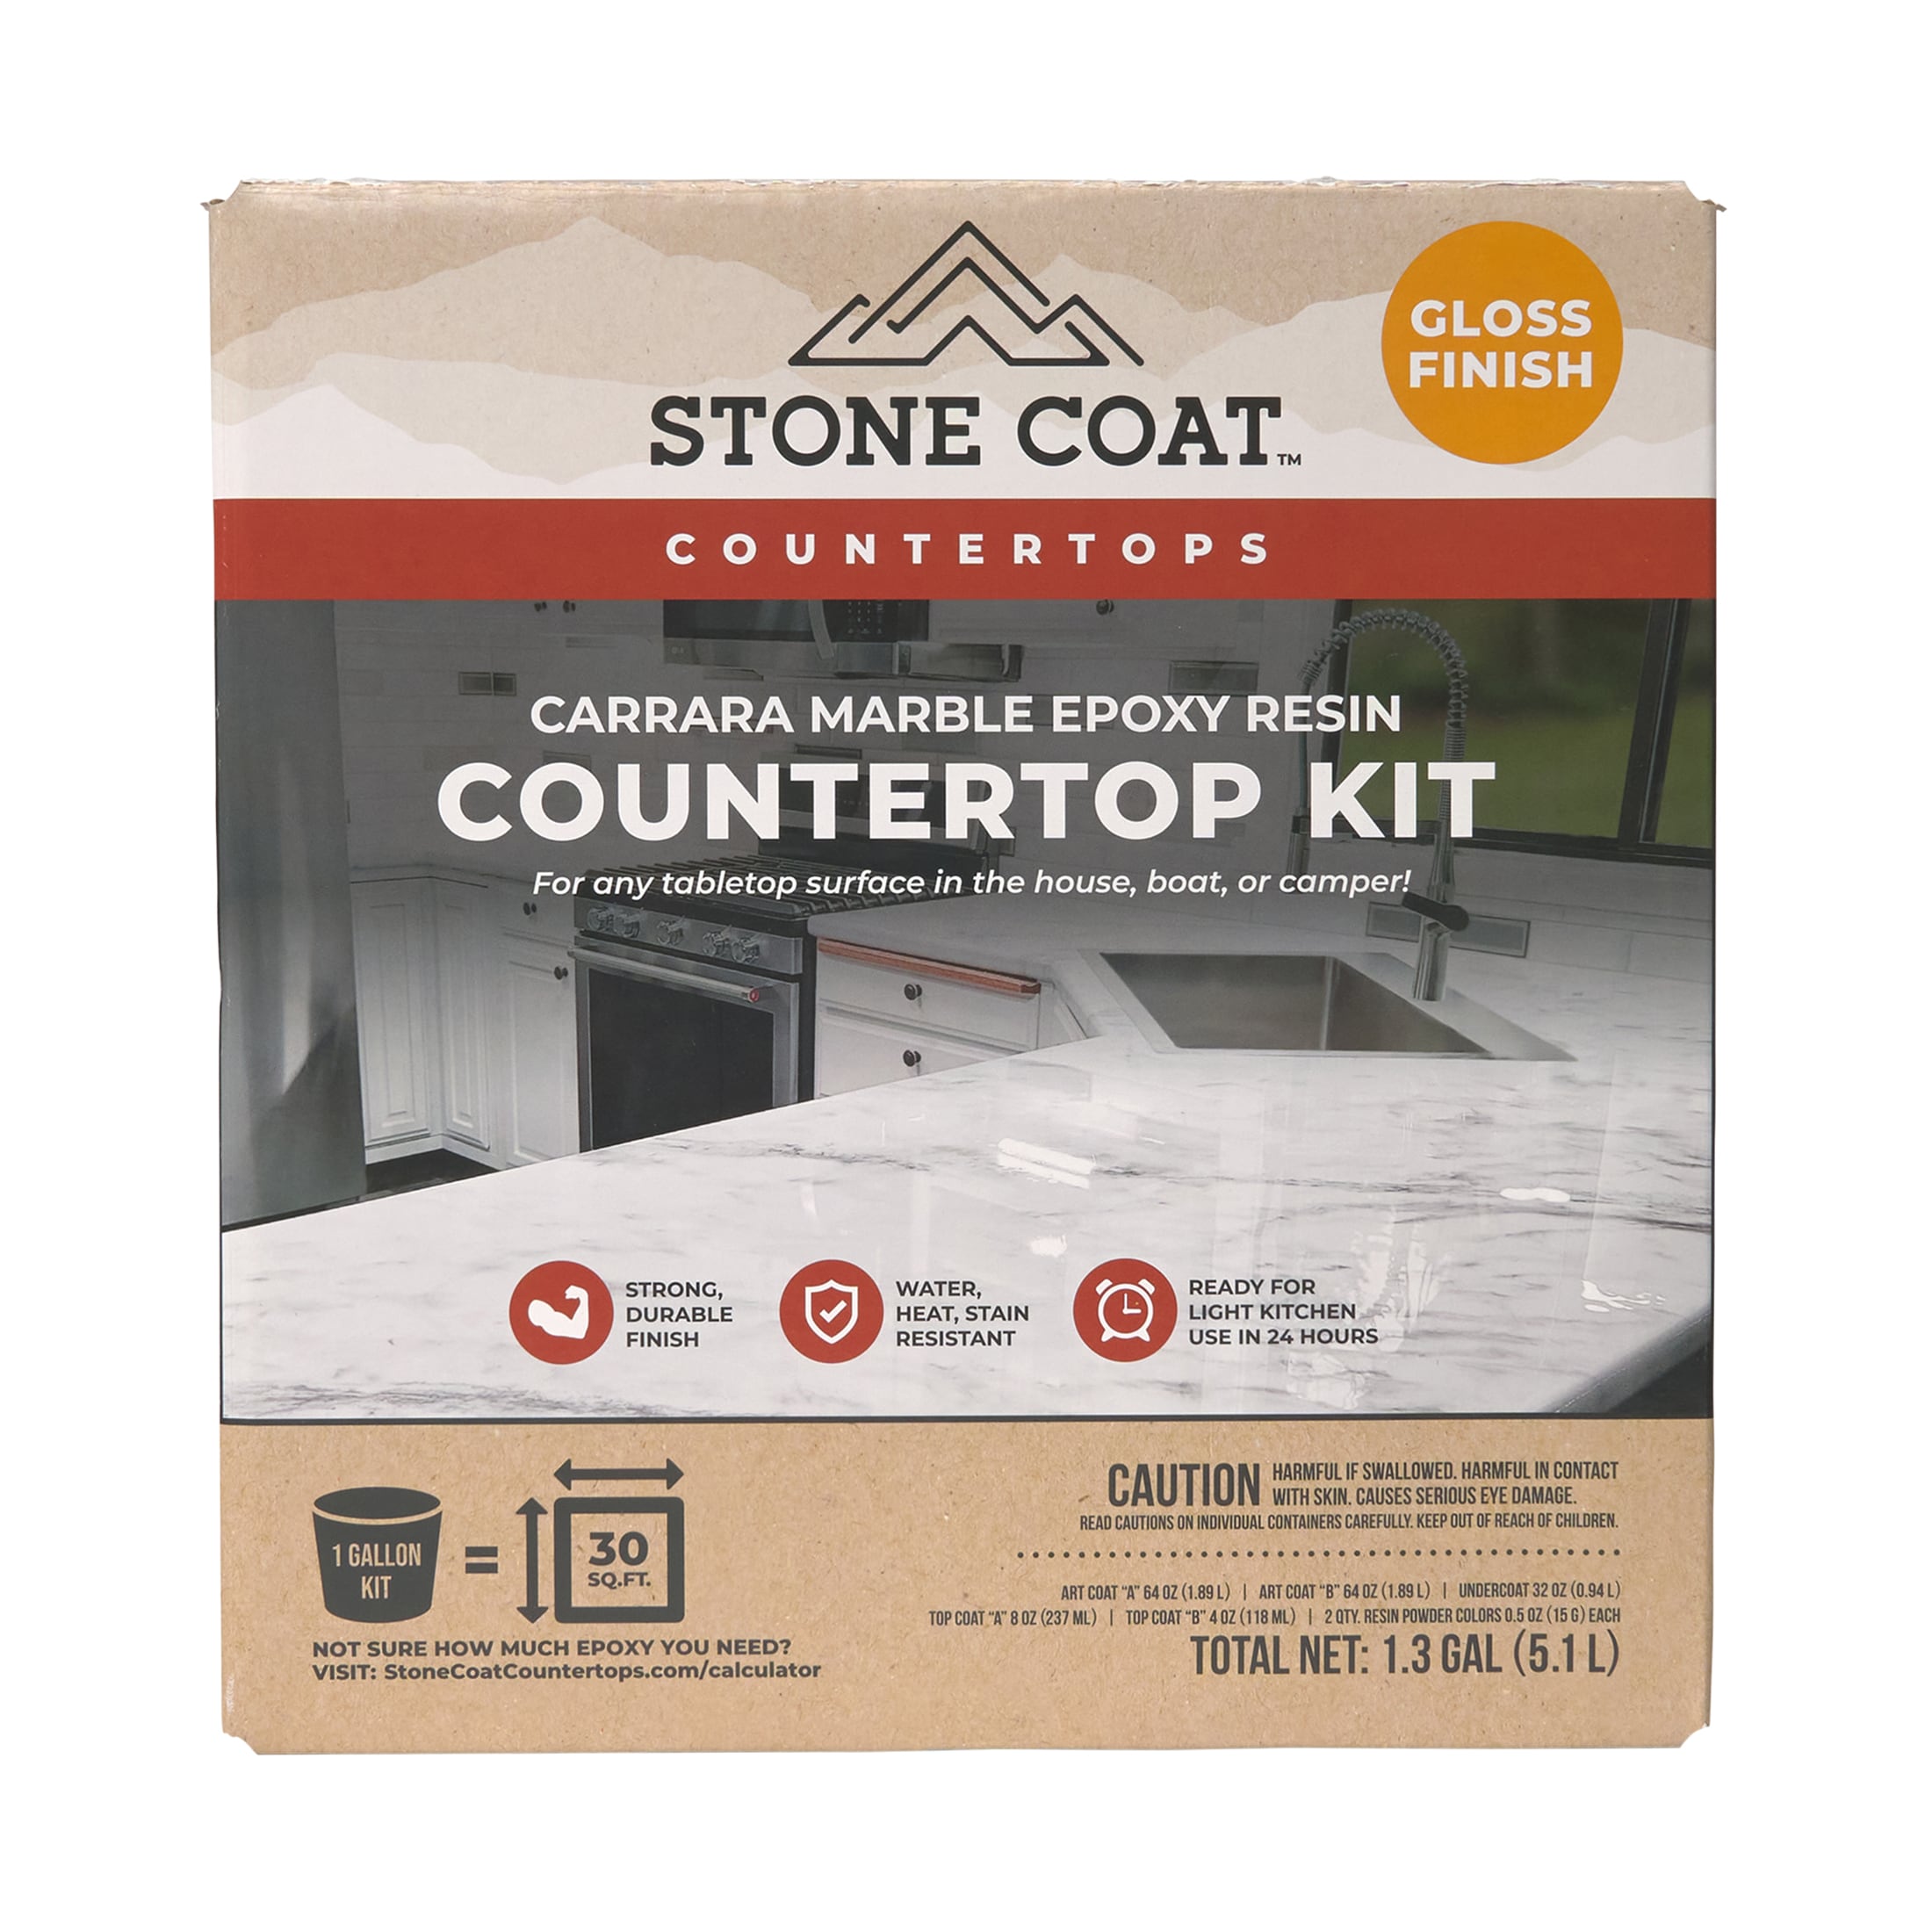 Stone Coat Countertops Multiple High-gloss Countertop Refinishing